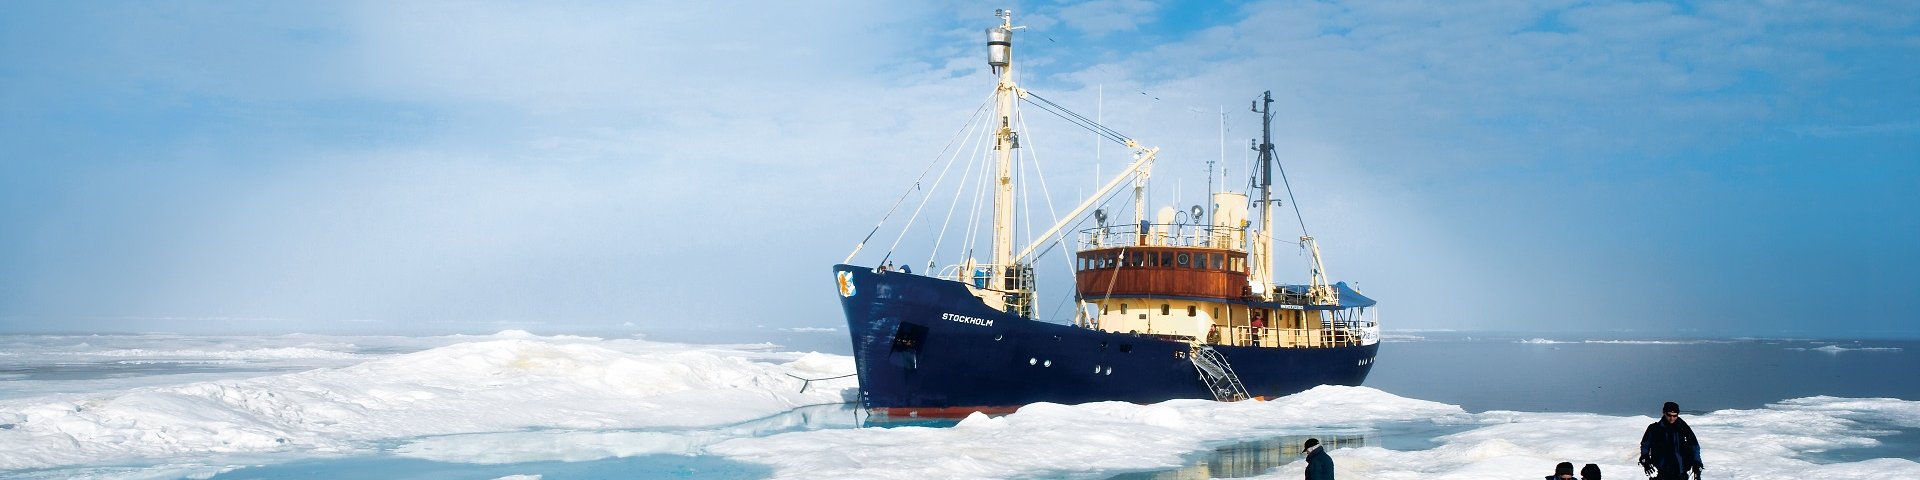 Expeditionsschiff Stockholm im Eis